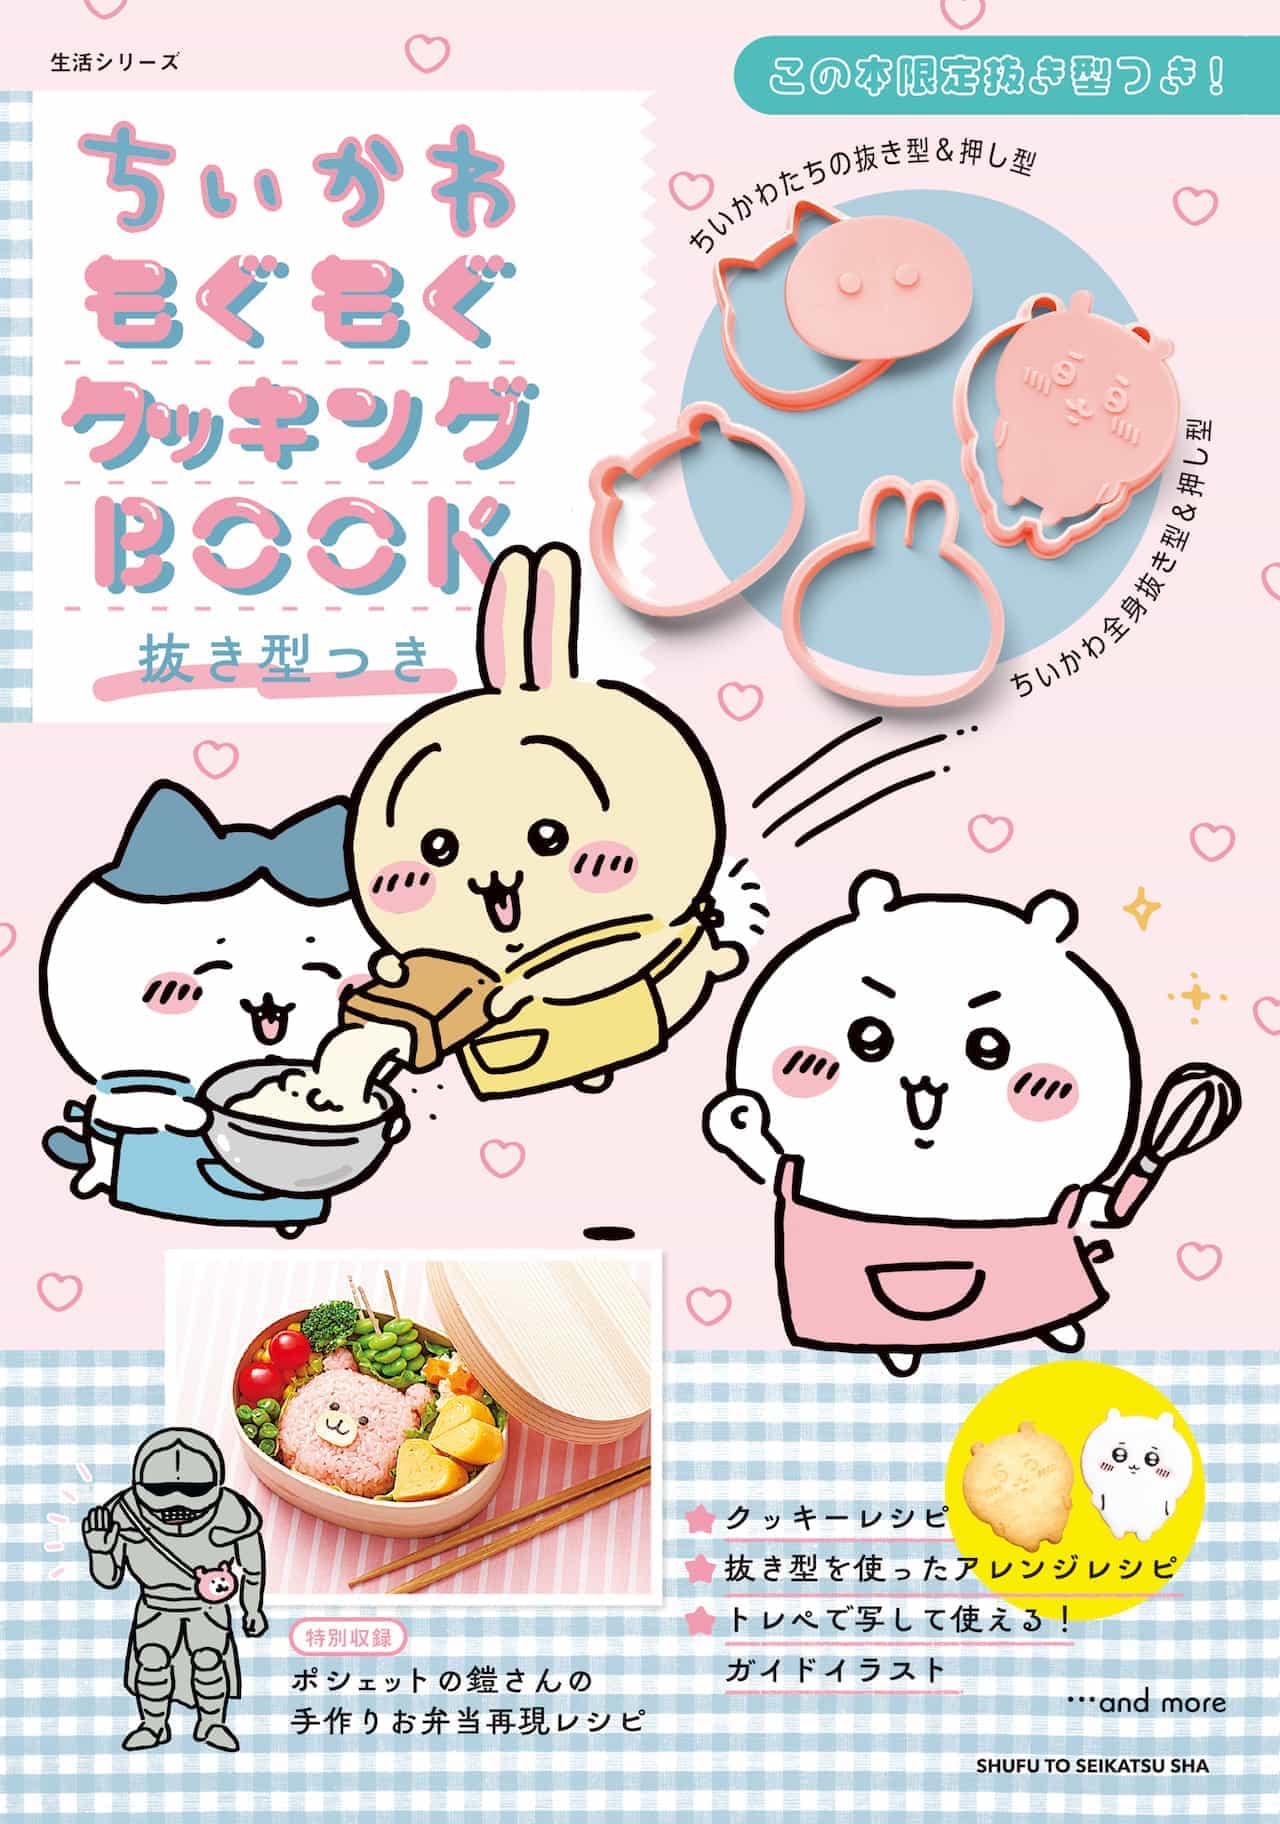 Shufu to Seikatsusha "Chiikawa Mogu Cooking Book with Piecing Molds" (Japanese only)